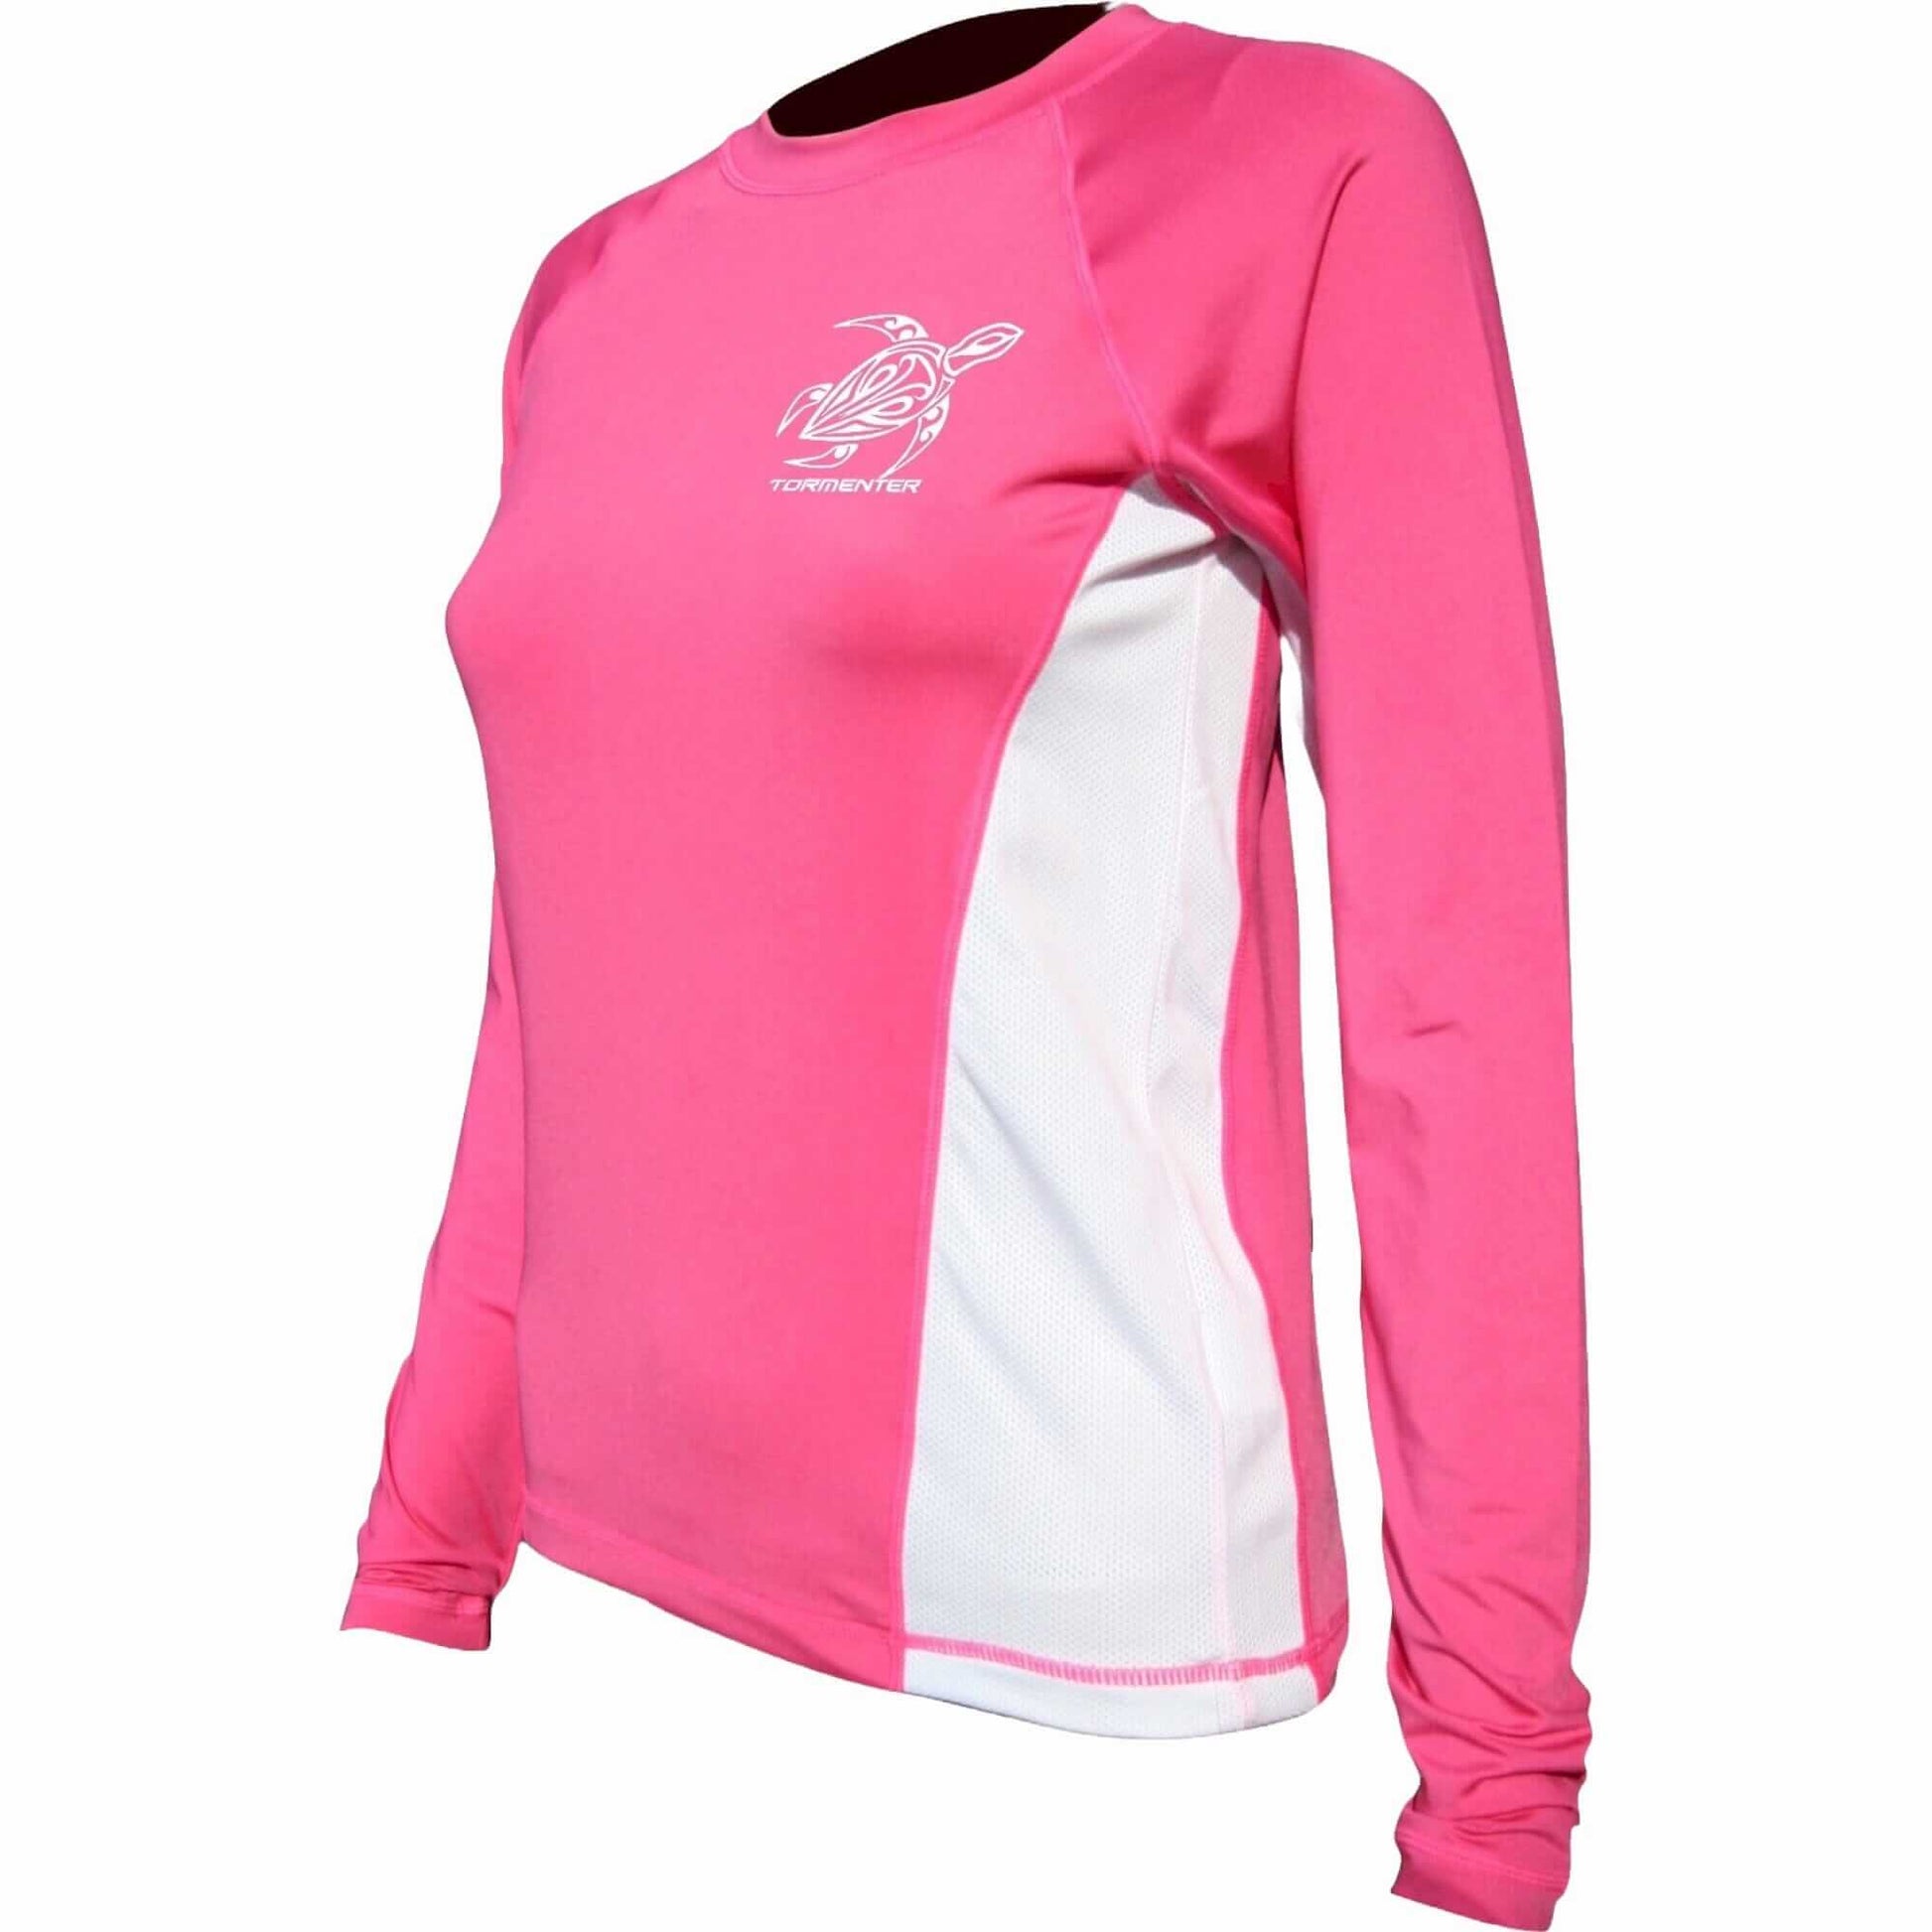 Ladies SPF-50 Performance Shirt - Pink Turtle FINAL CLEARANCE SALE Ladies' SPF Shirt Rash Guard Tormenter Ocean XXS 